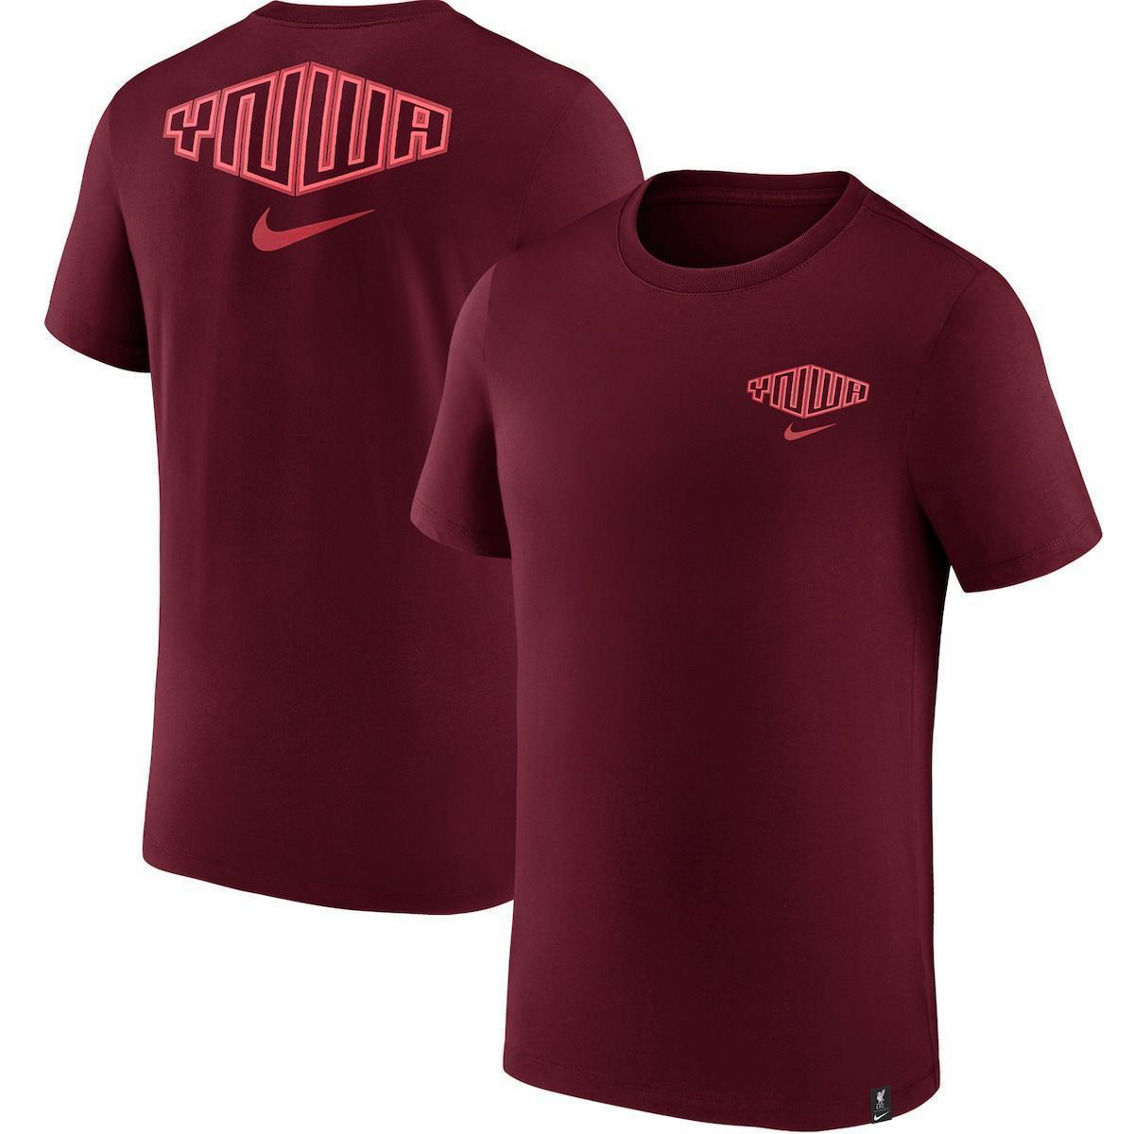 Men's Nike Burgundy Liverpool Team Voice T-Shirt - Image 1 of 4